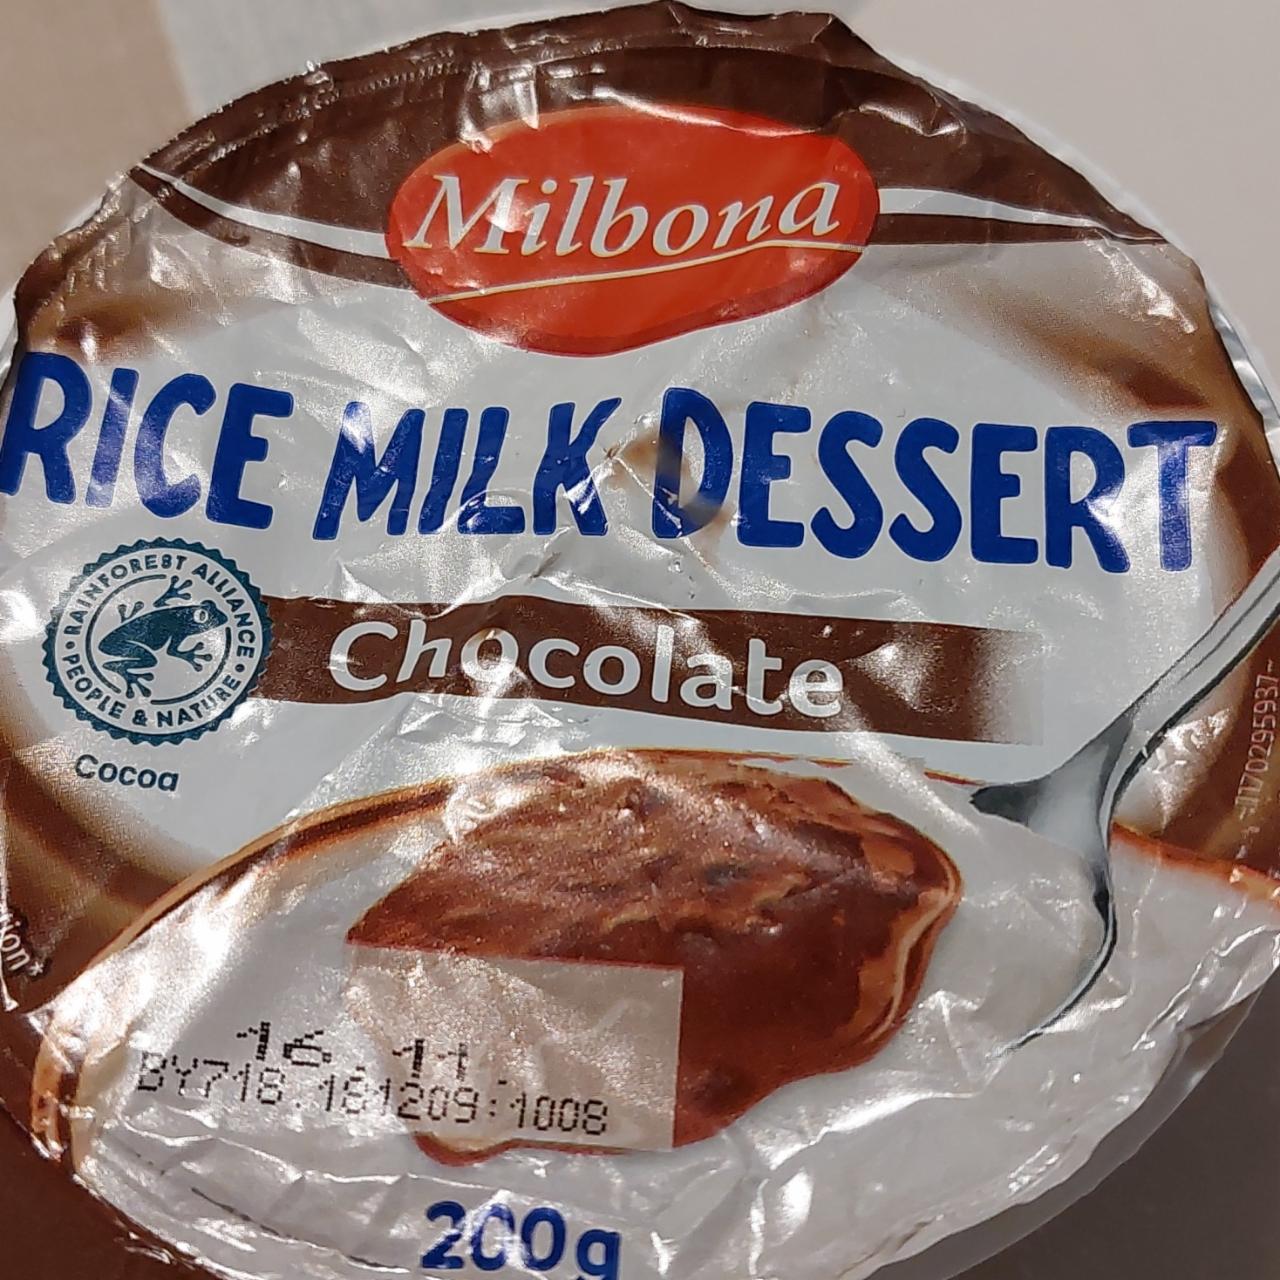 Képek - Rice milk dessert Chocolate Milbona